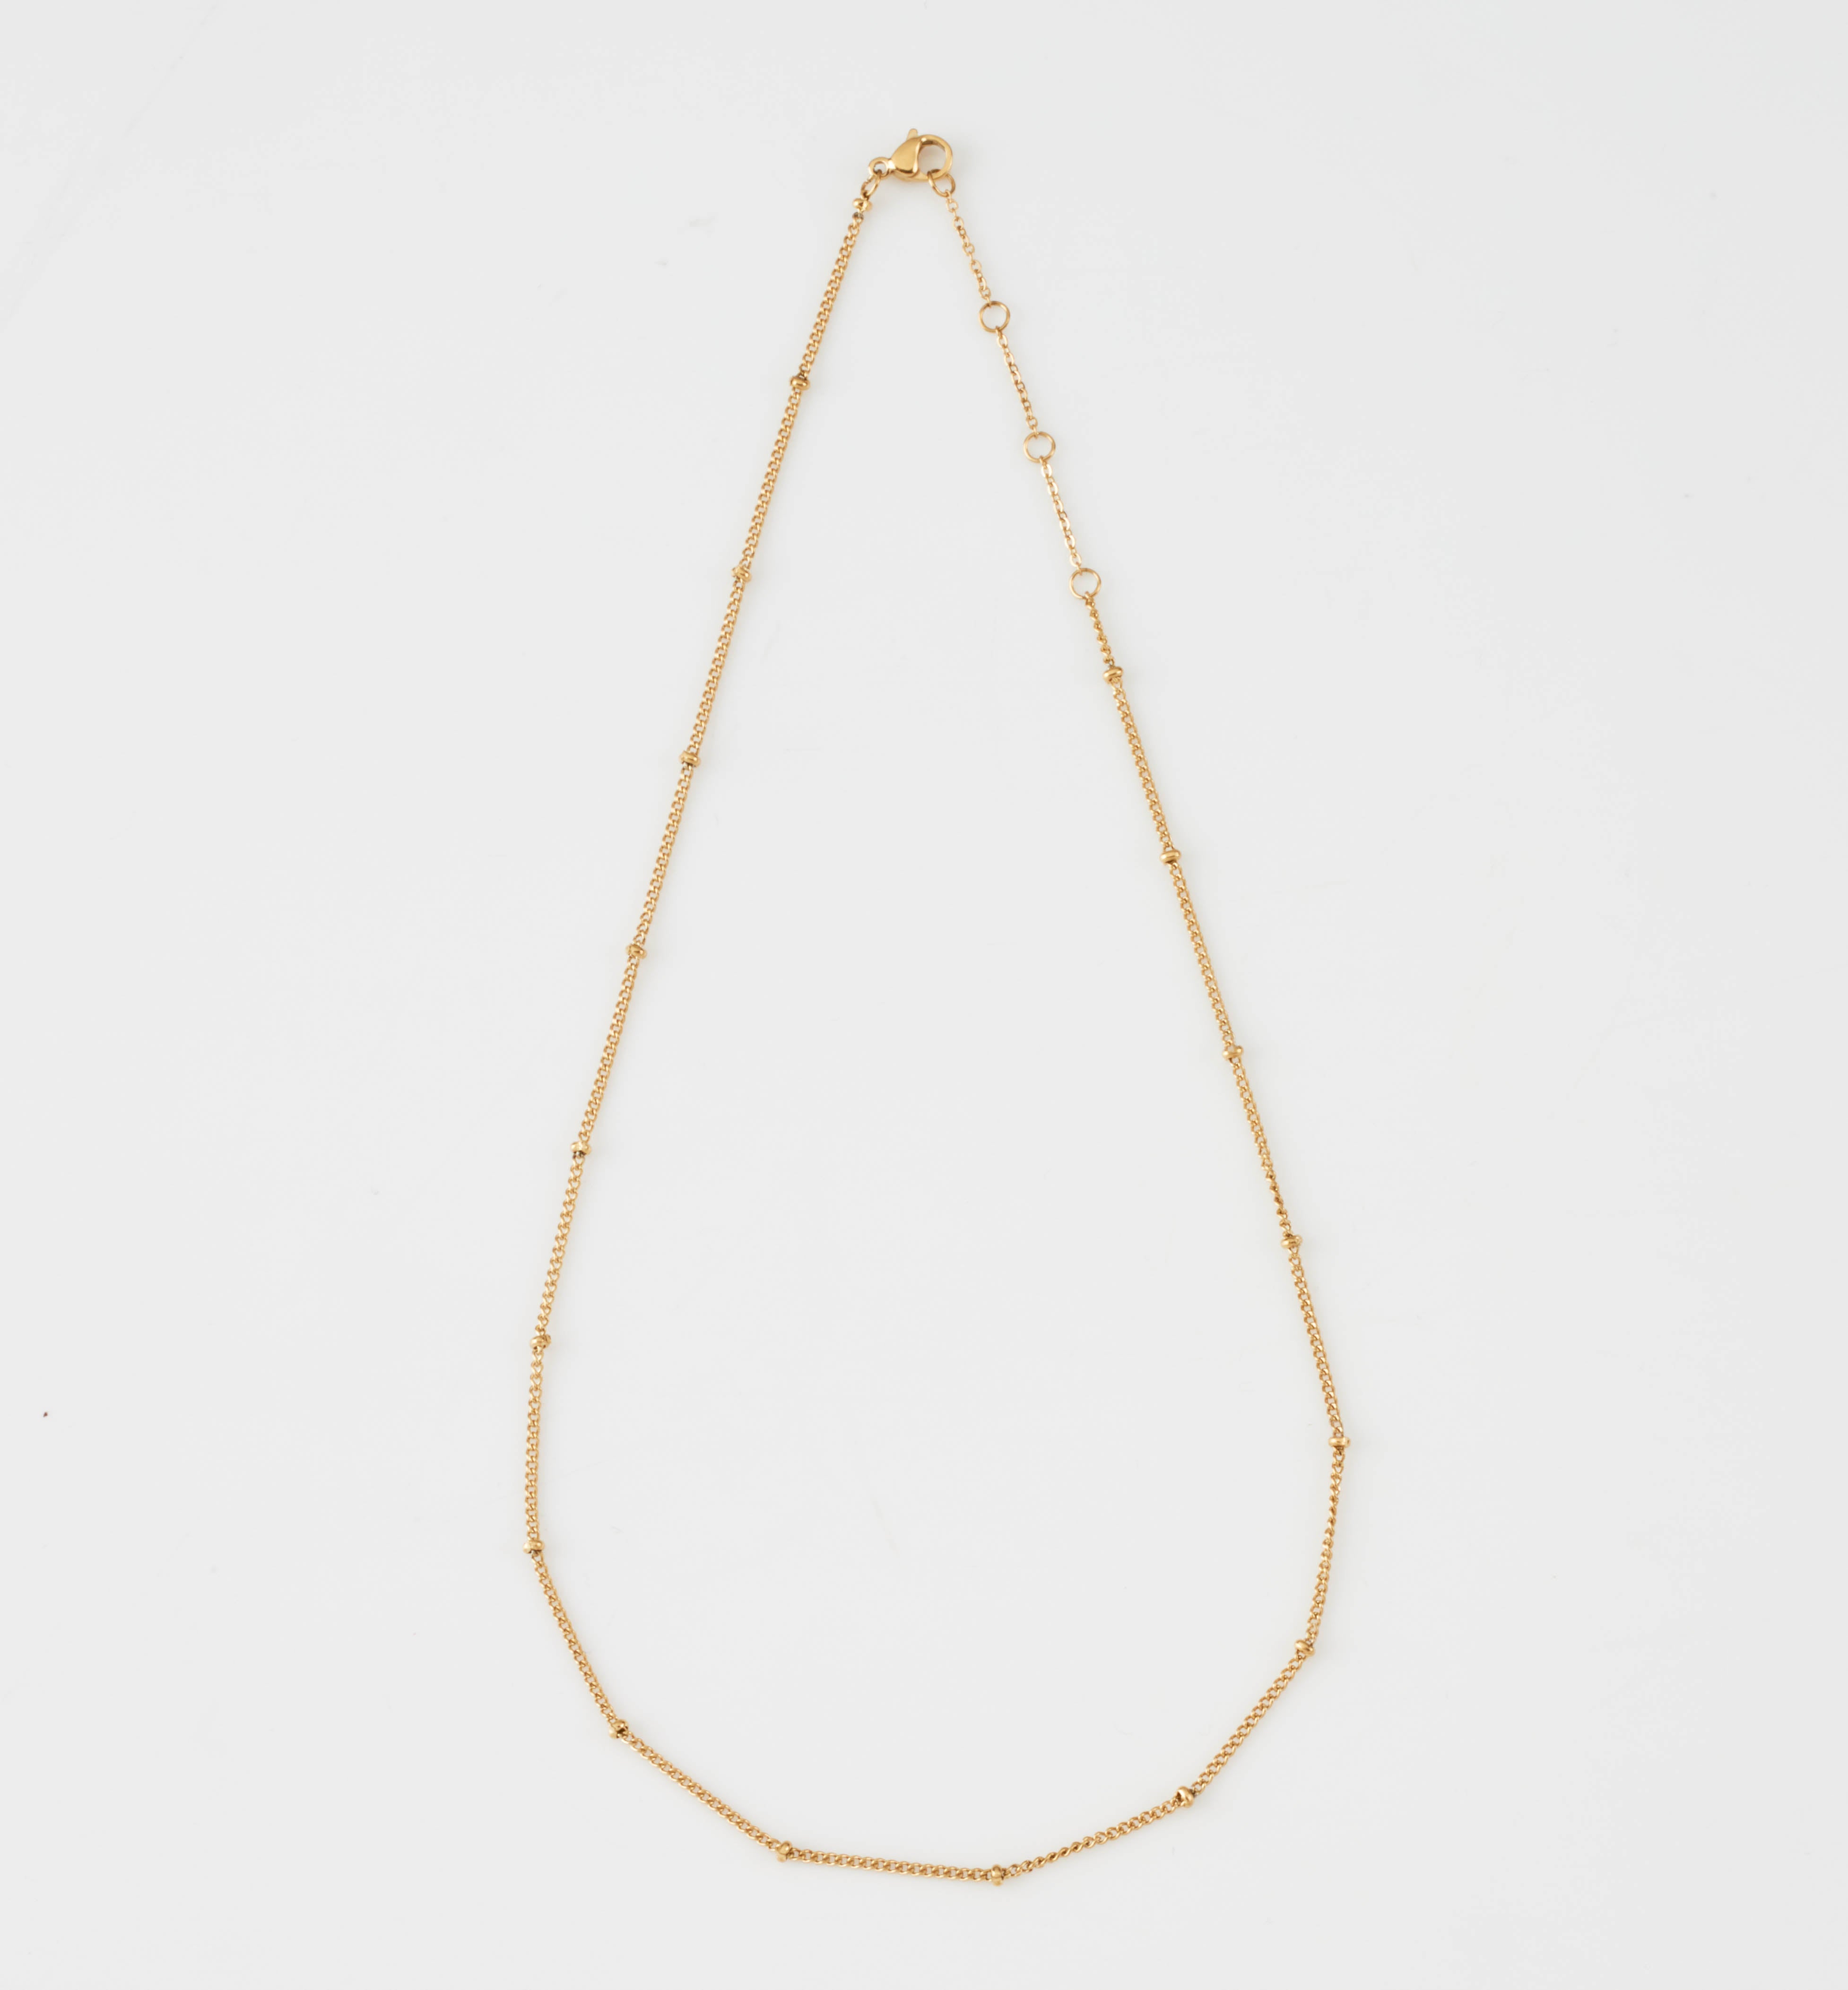 Josie - Gold Beaded Chain Necklace - Ocean Wave Jewelry